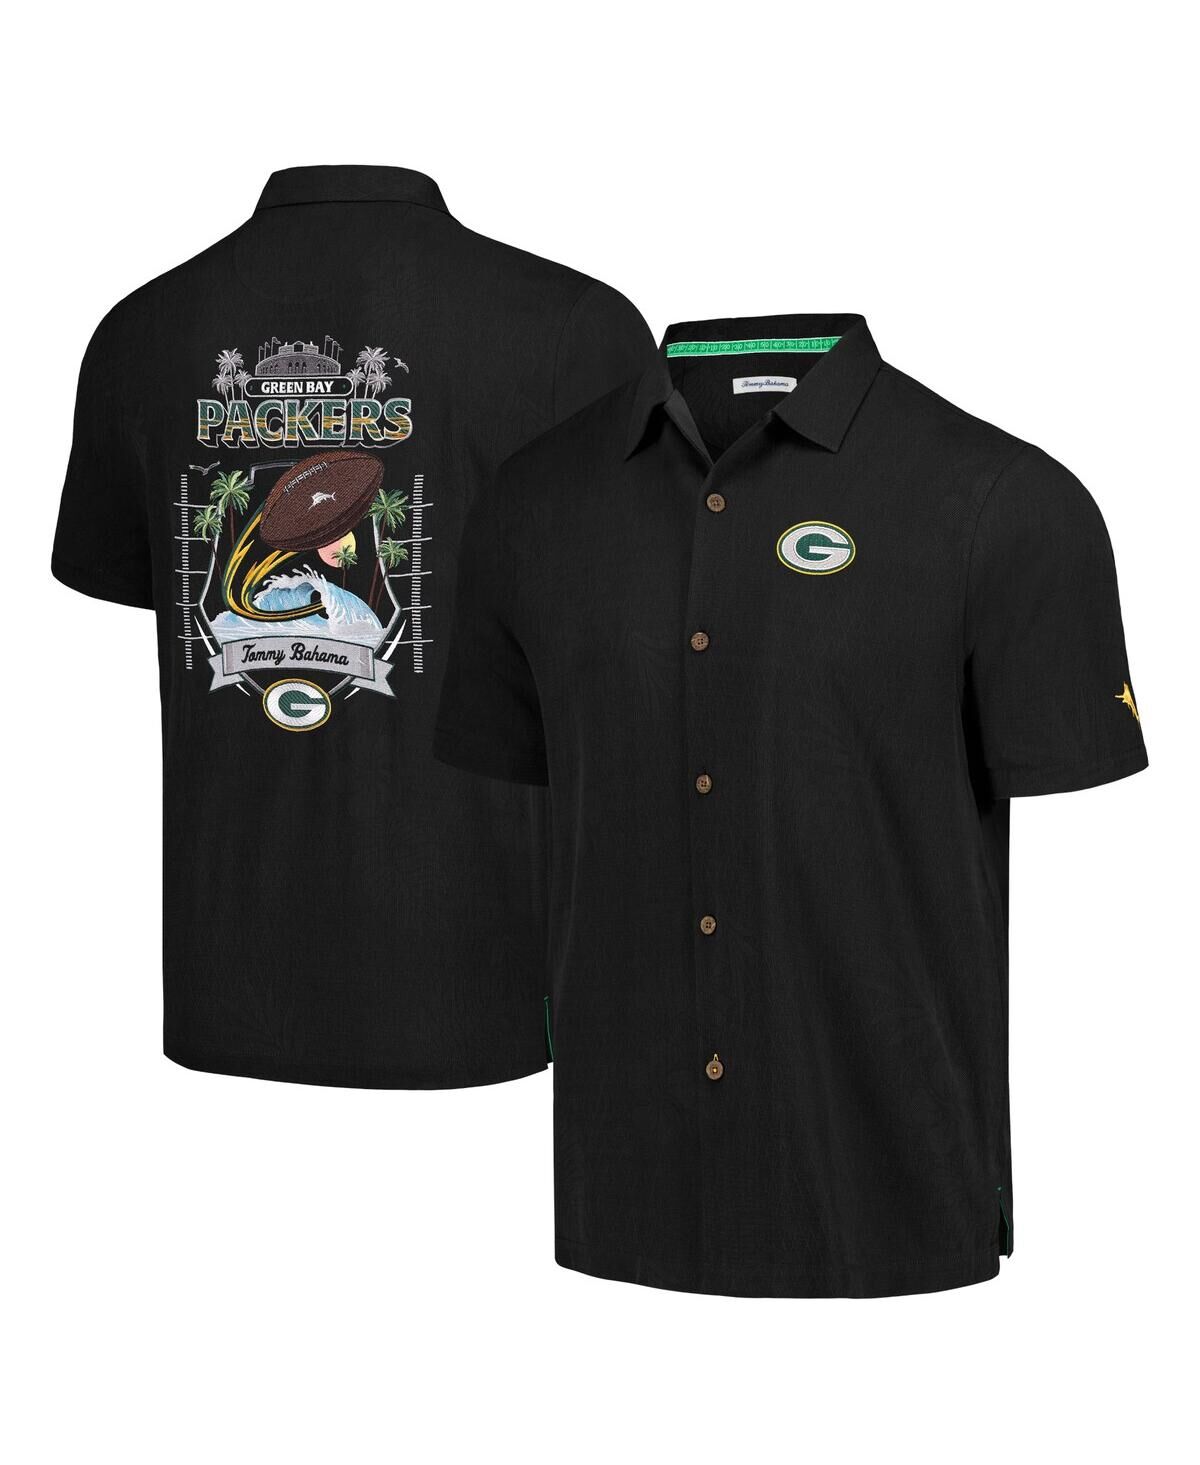 Tommy Bahama Men's Tommy Bahama Black Green Bay Packers Tidal Kickoff Camp Button-Up Shirt - Black